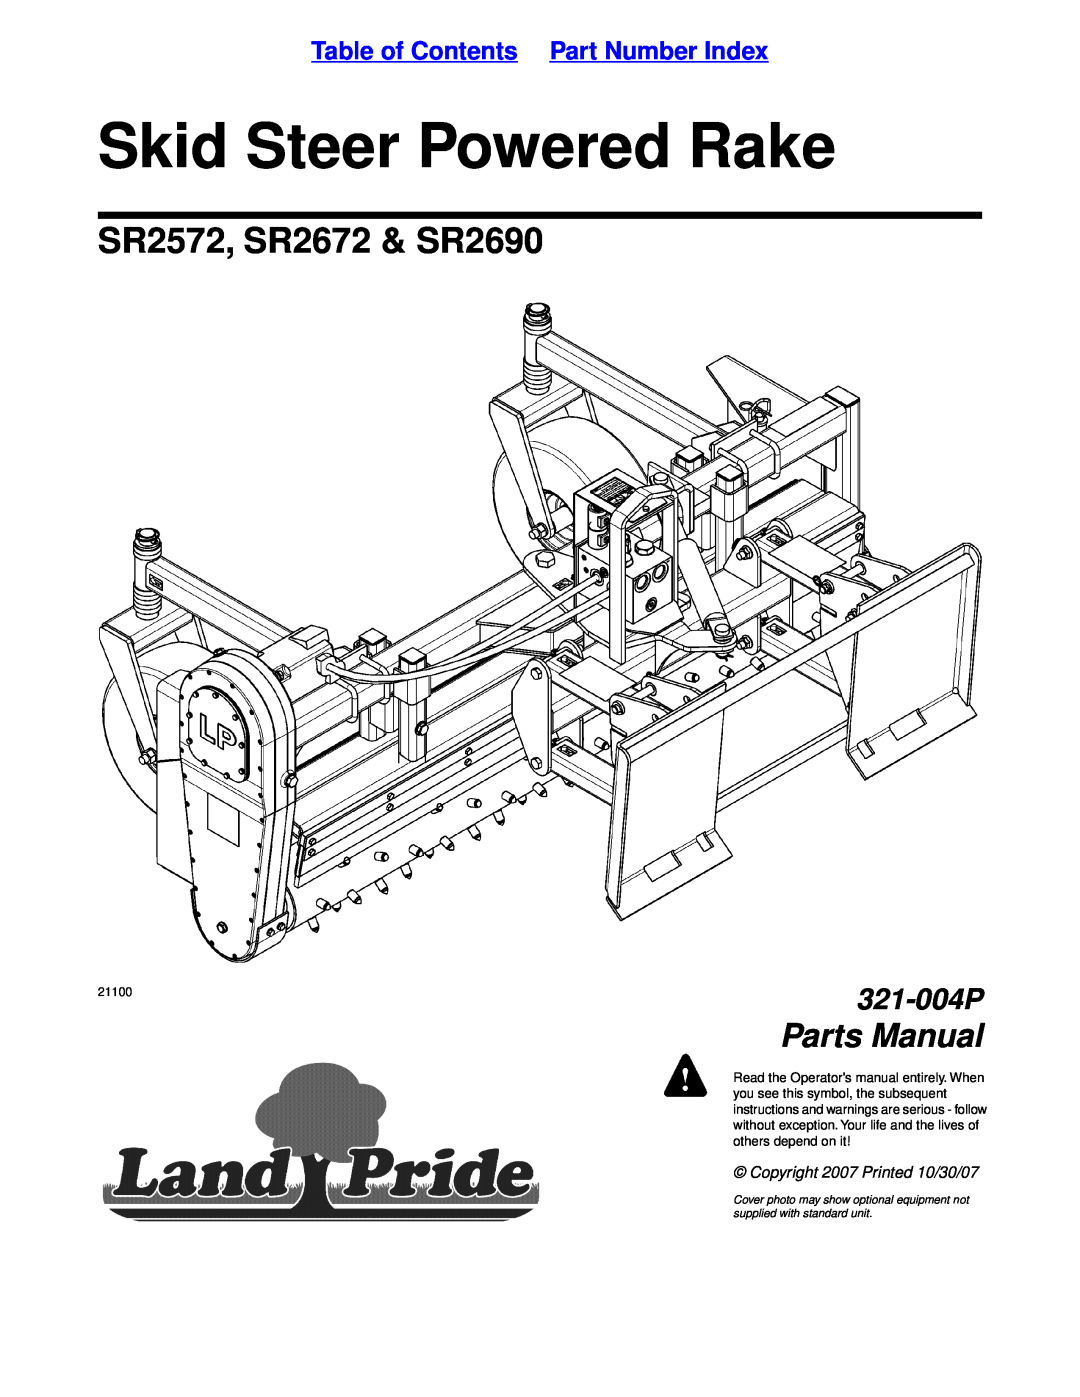 Land Pride specifications Specifications & Capacities Powered Rakes, SR2672 & SR2690 Skid Steer Rakes, 321-004S 